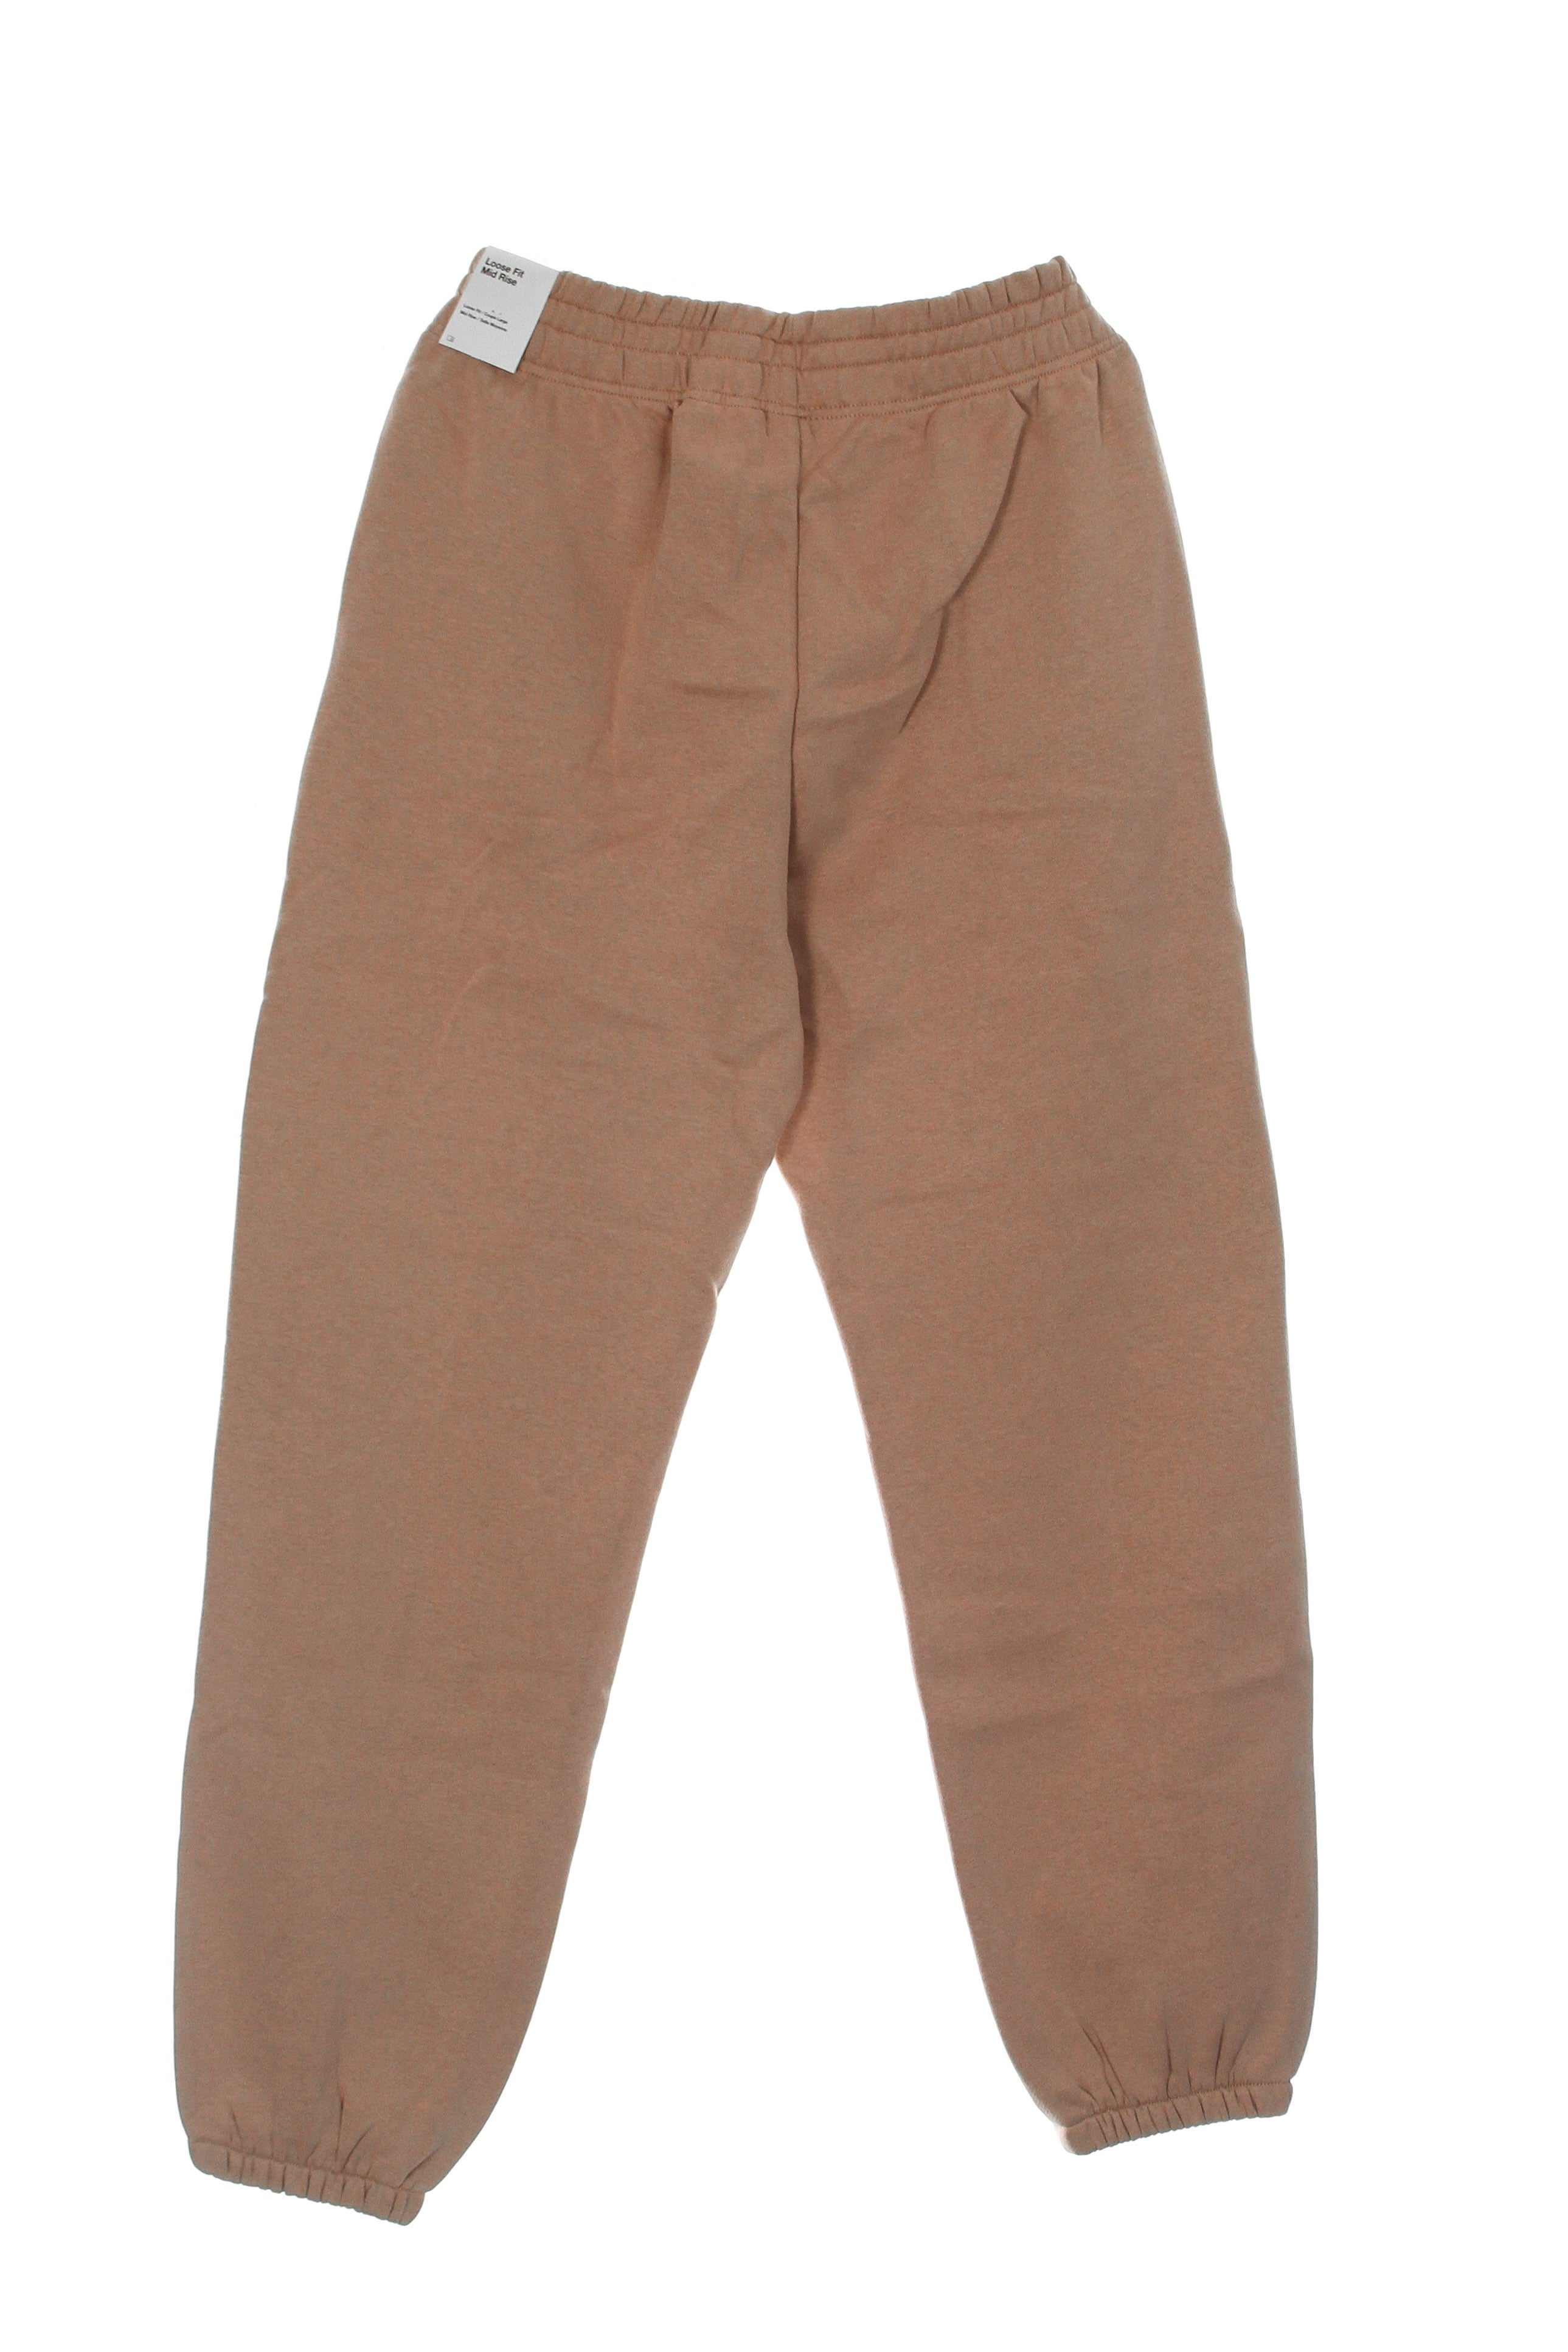 Pantalone Tuta Felpato Donna Essential Collection Fleece Pant Rose Whisper